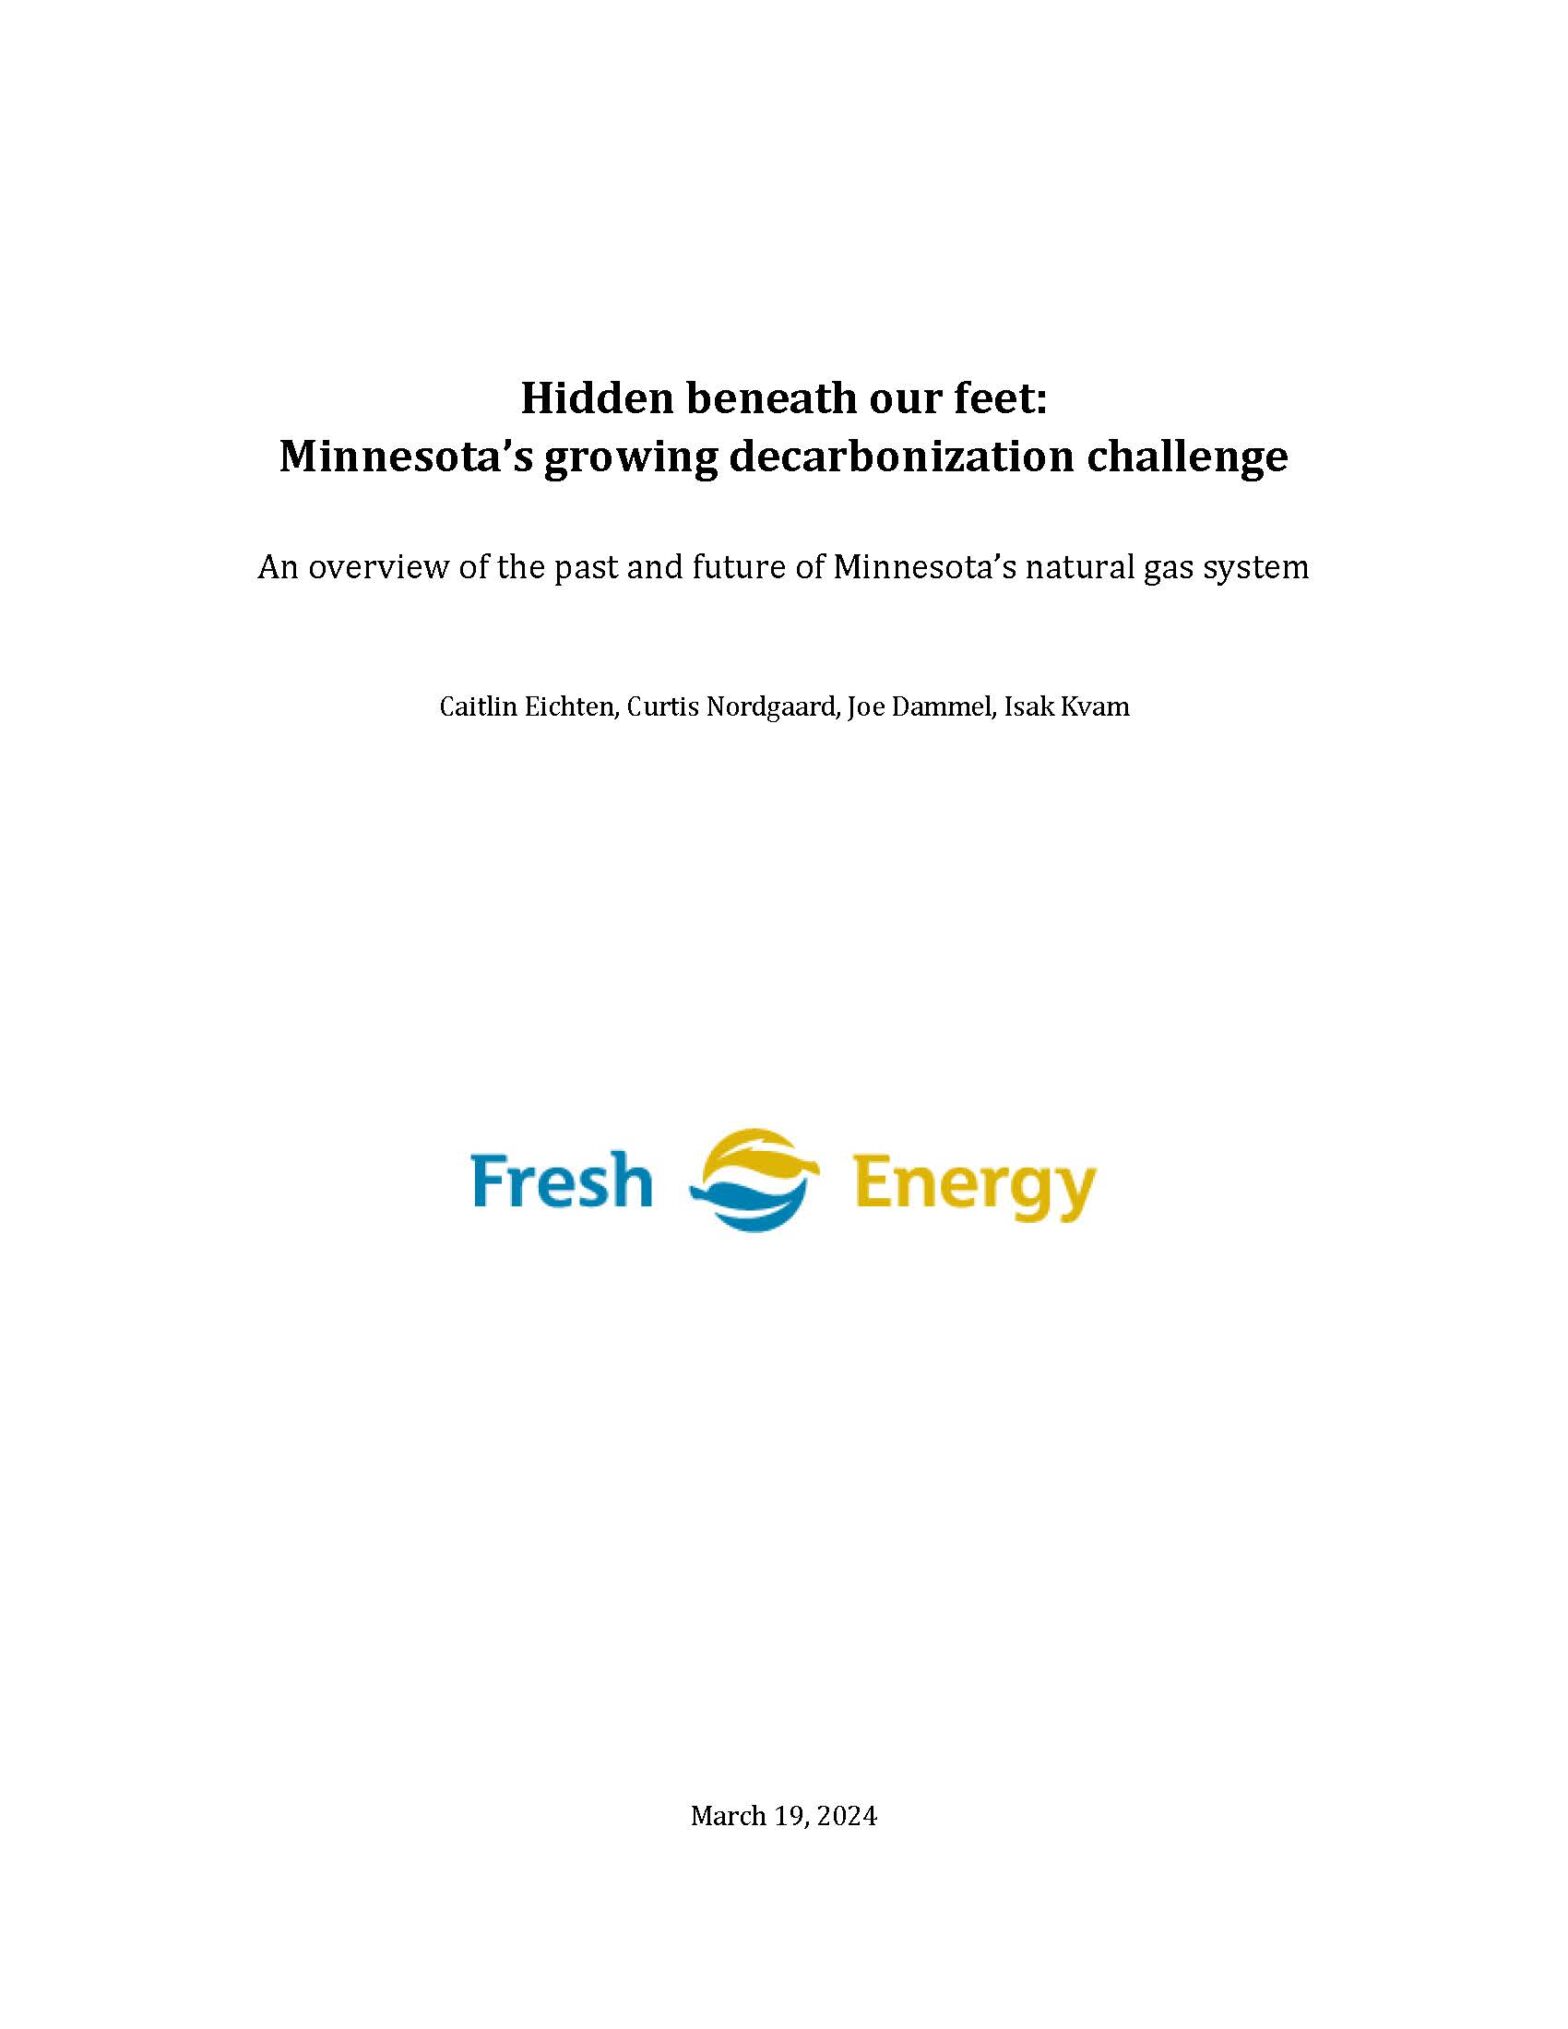 Hidden beneath our feet: Minnesota’s growing decarbonization challenge